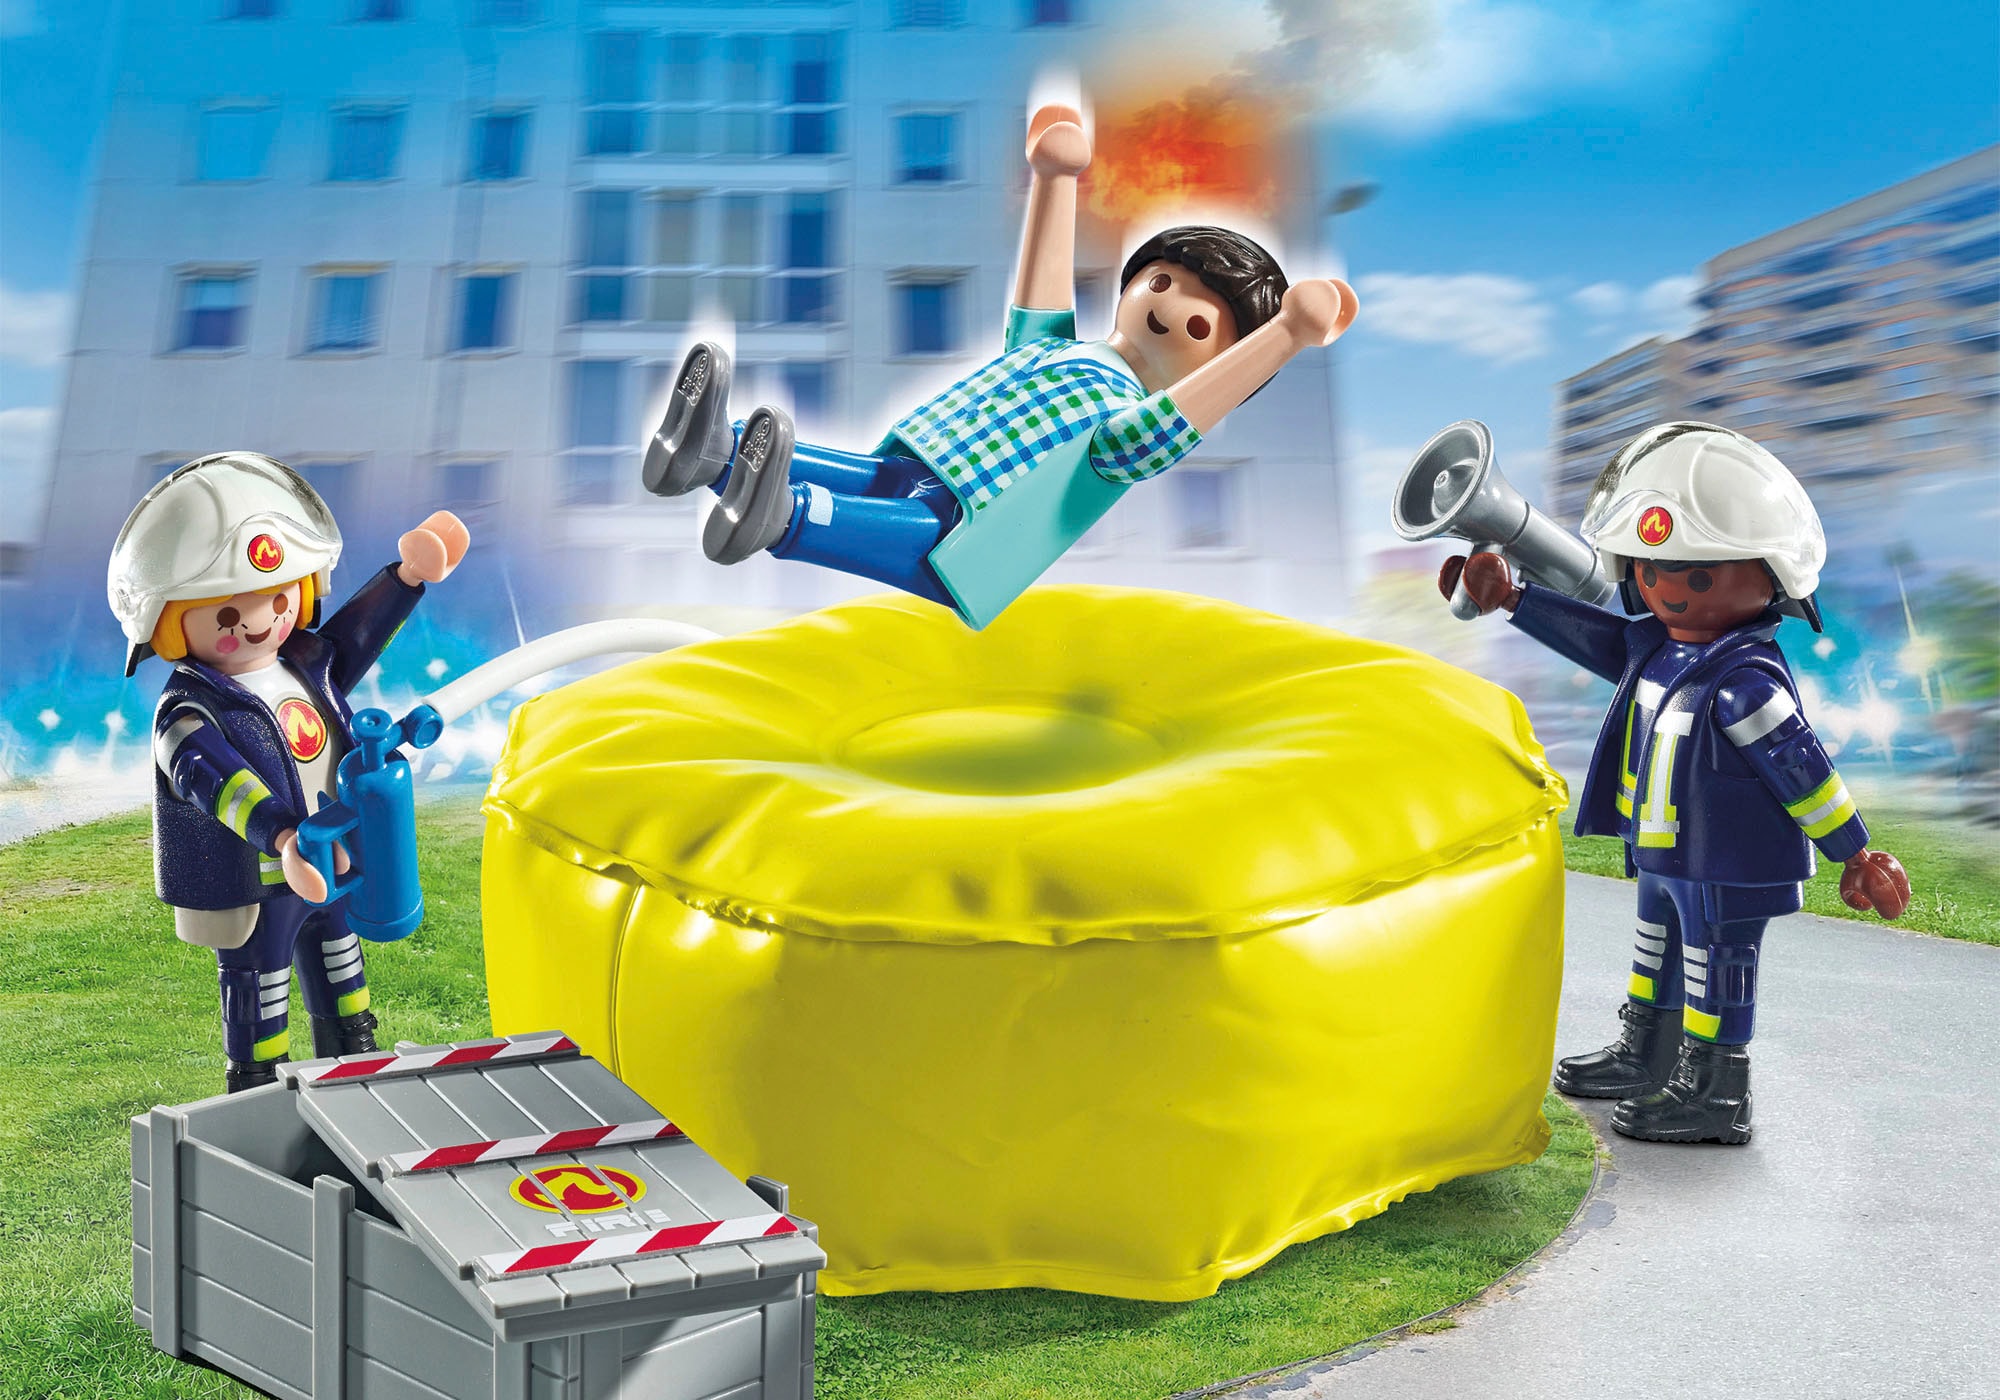 Playmobil® Konstruktions-Spielset »Feuerwehrleute mit Luftkissen (71465), Action Heroes«, (13 St.), Made in Europe